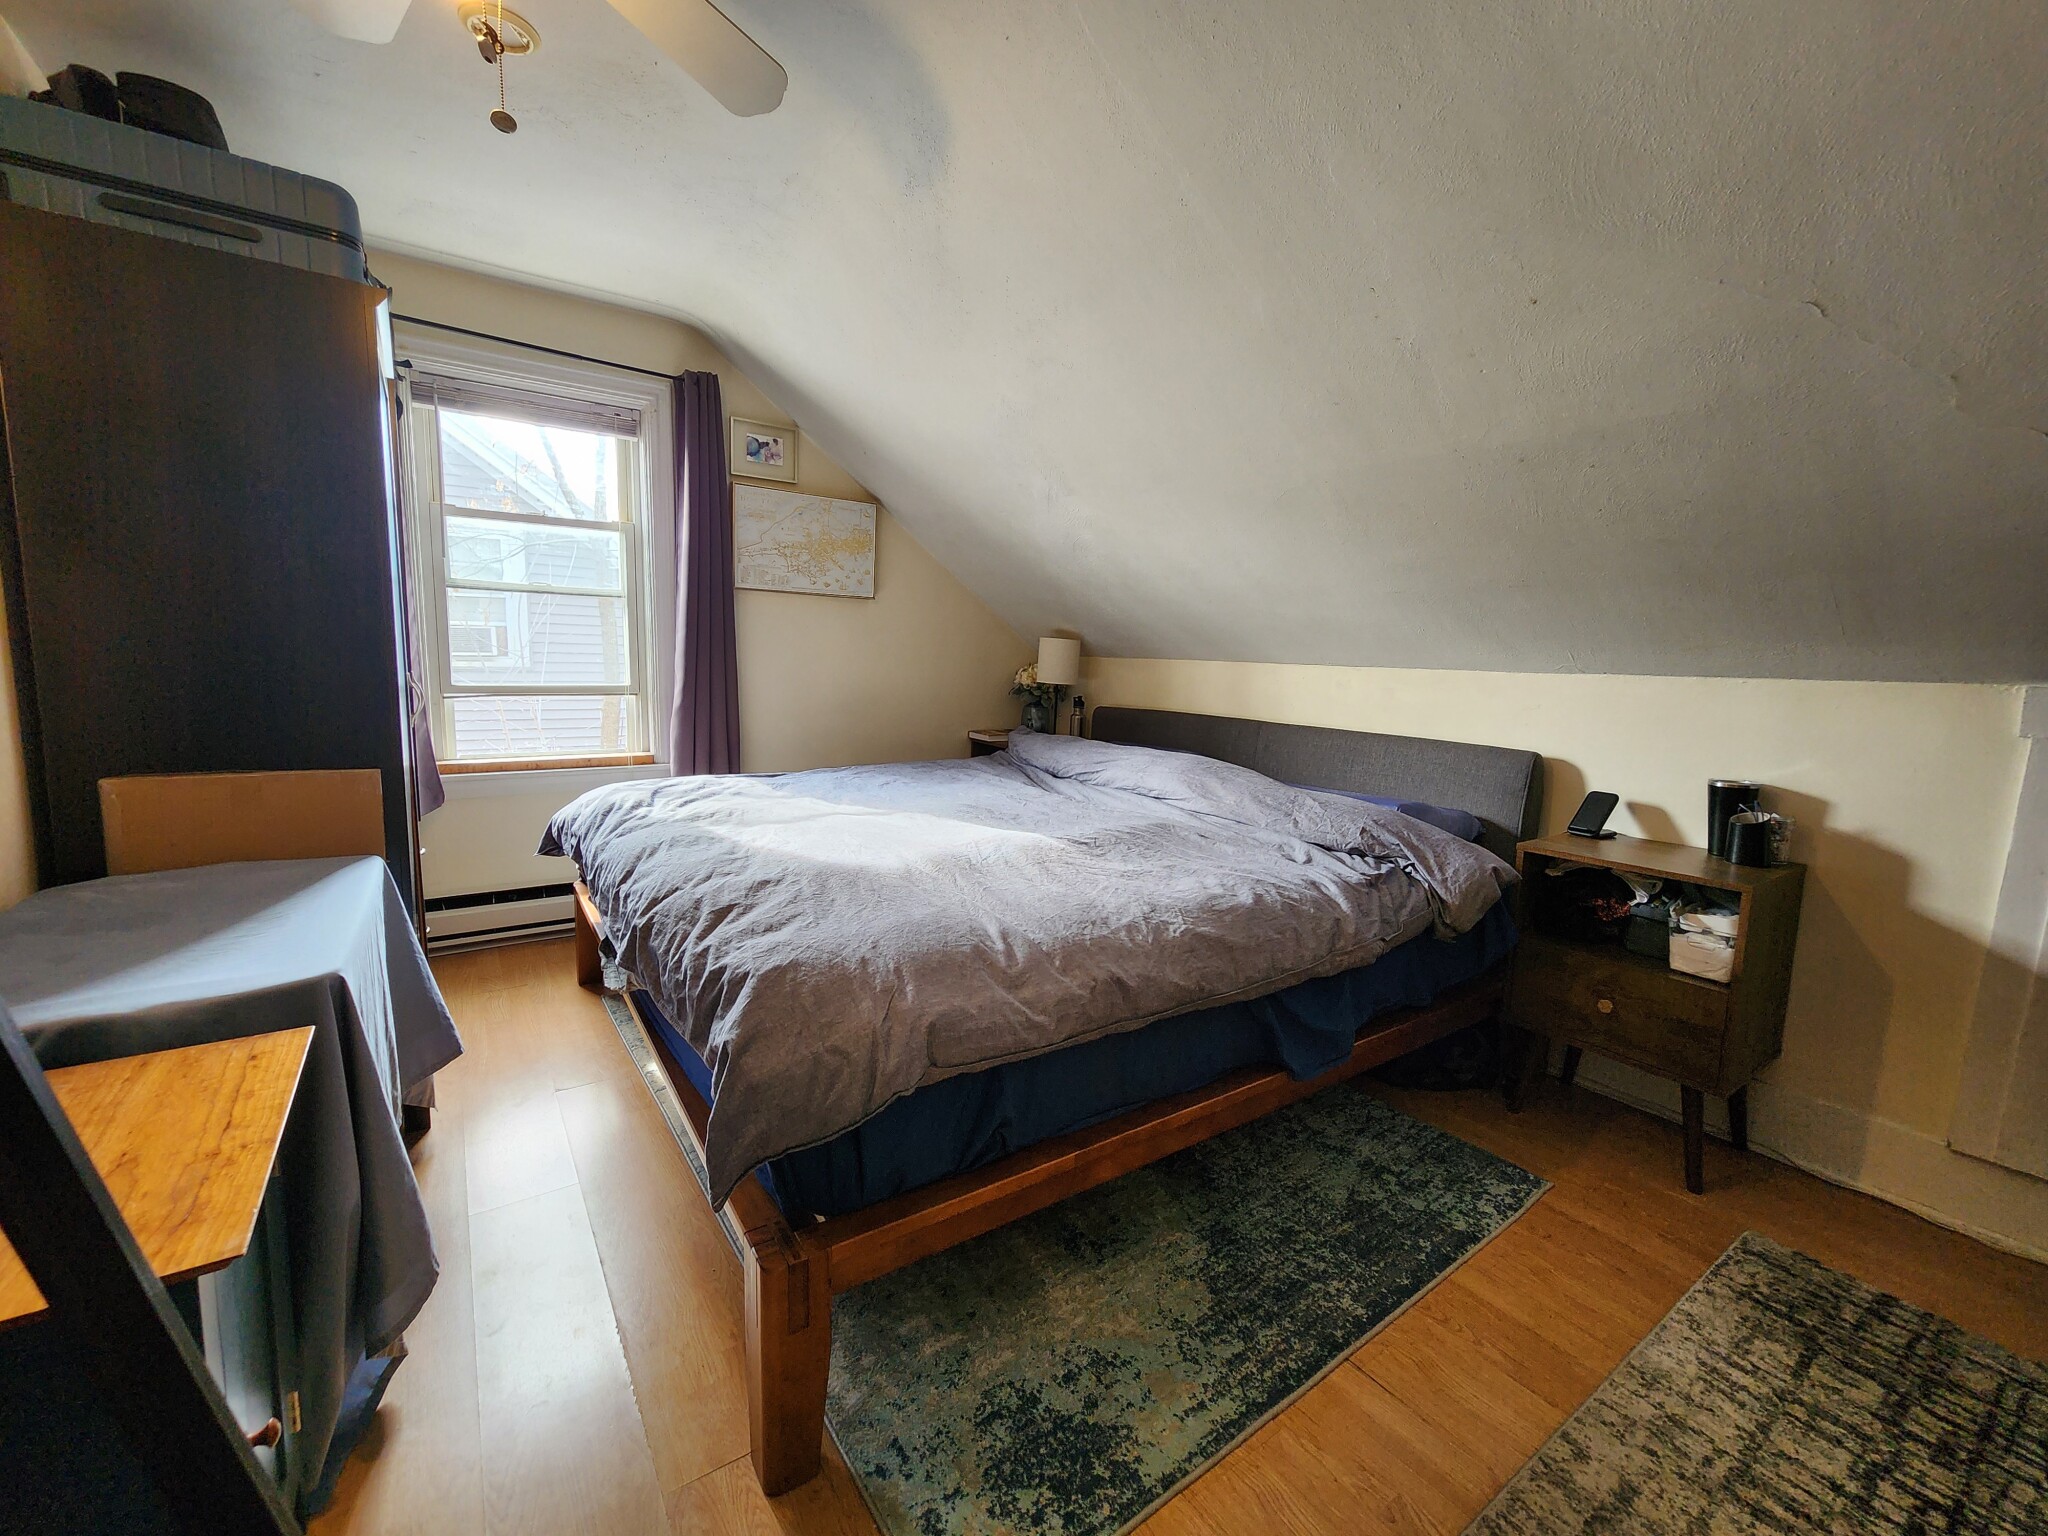 Photos of apartment on Webley,Boston MA 02134